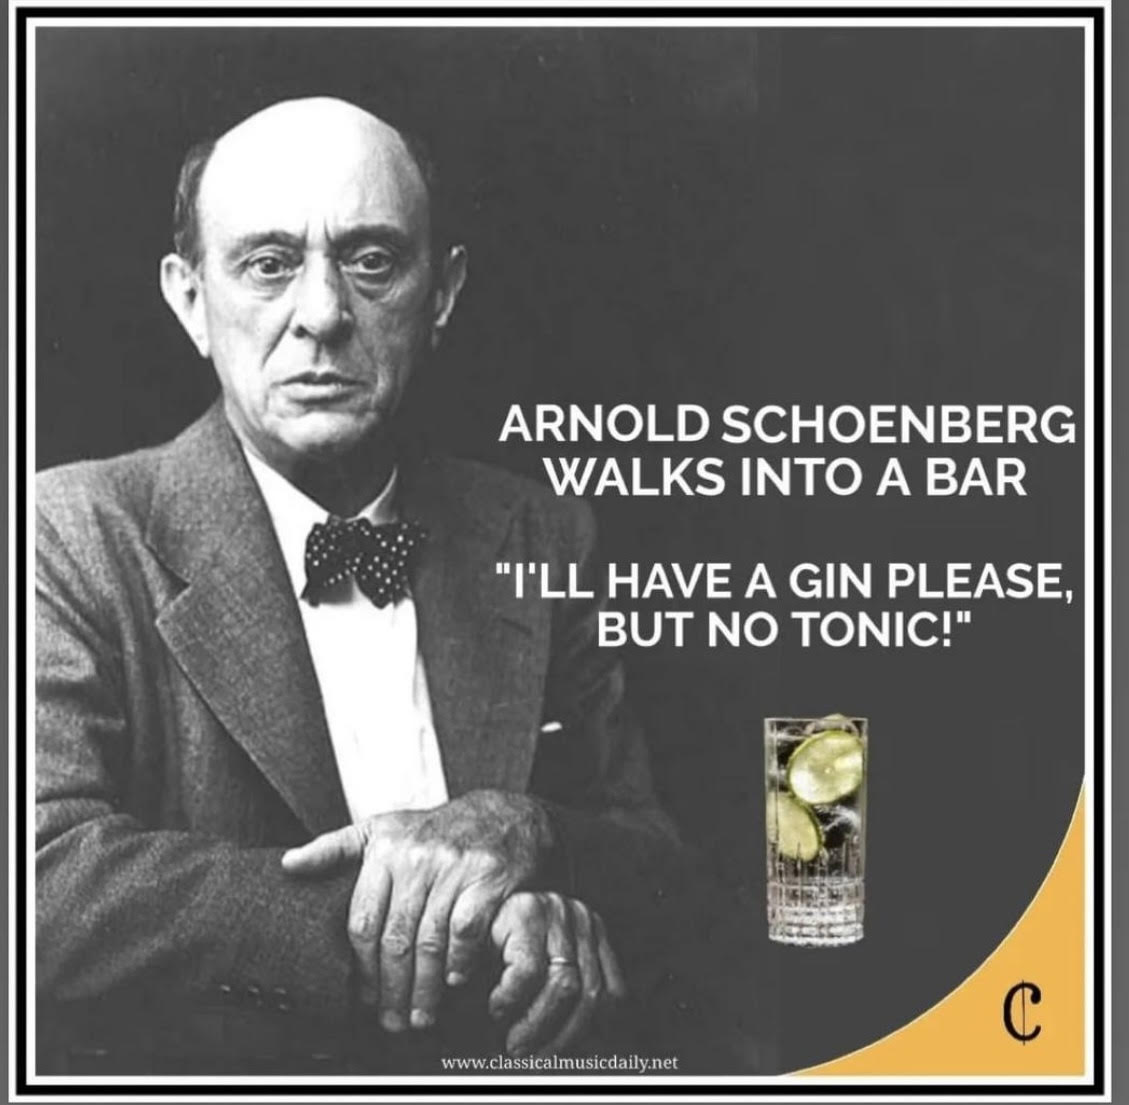 Arnold Schoenberg walks into a bar music joke